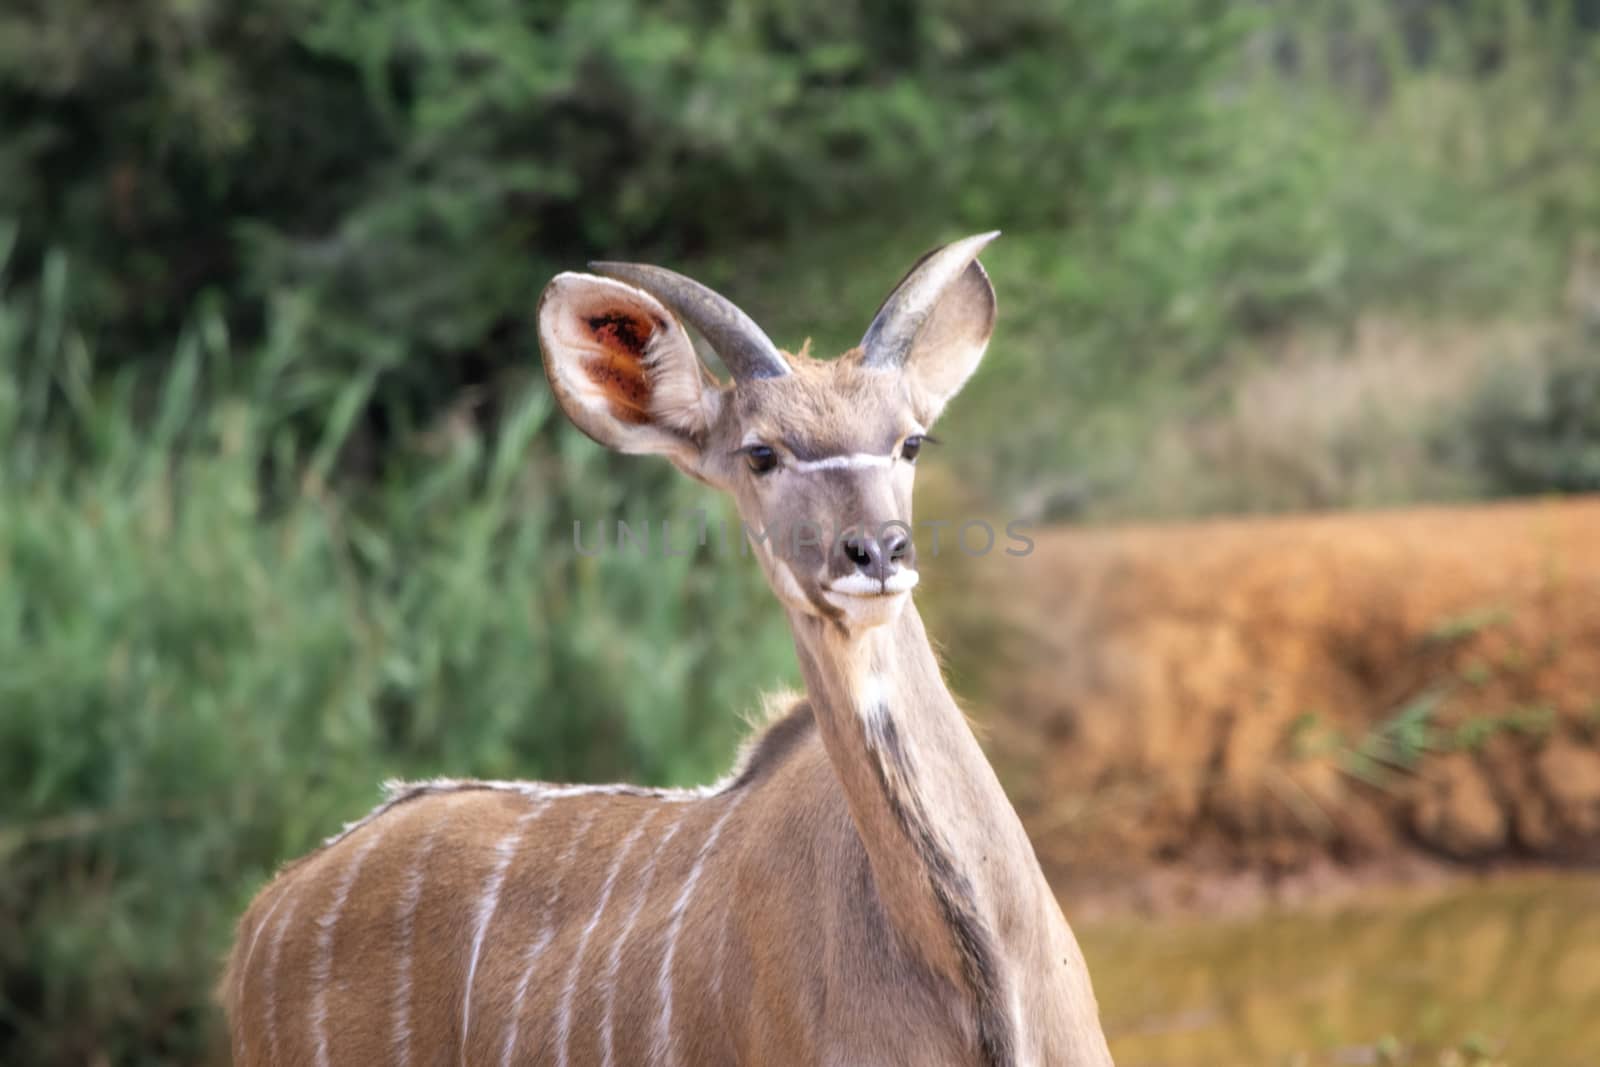 Juvenile Greater Kudu or Tragelaphus strepsiceros alerted in the African savannah by kb79